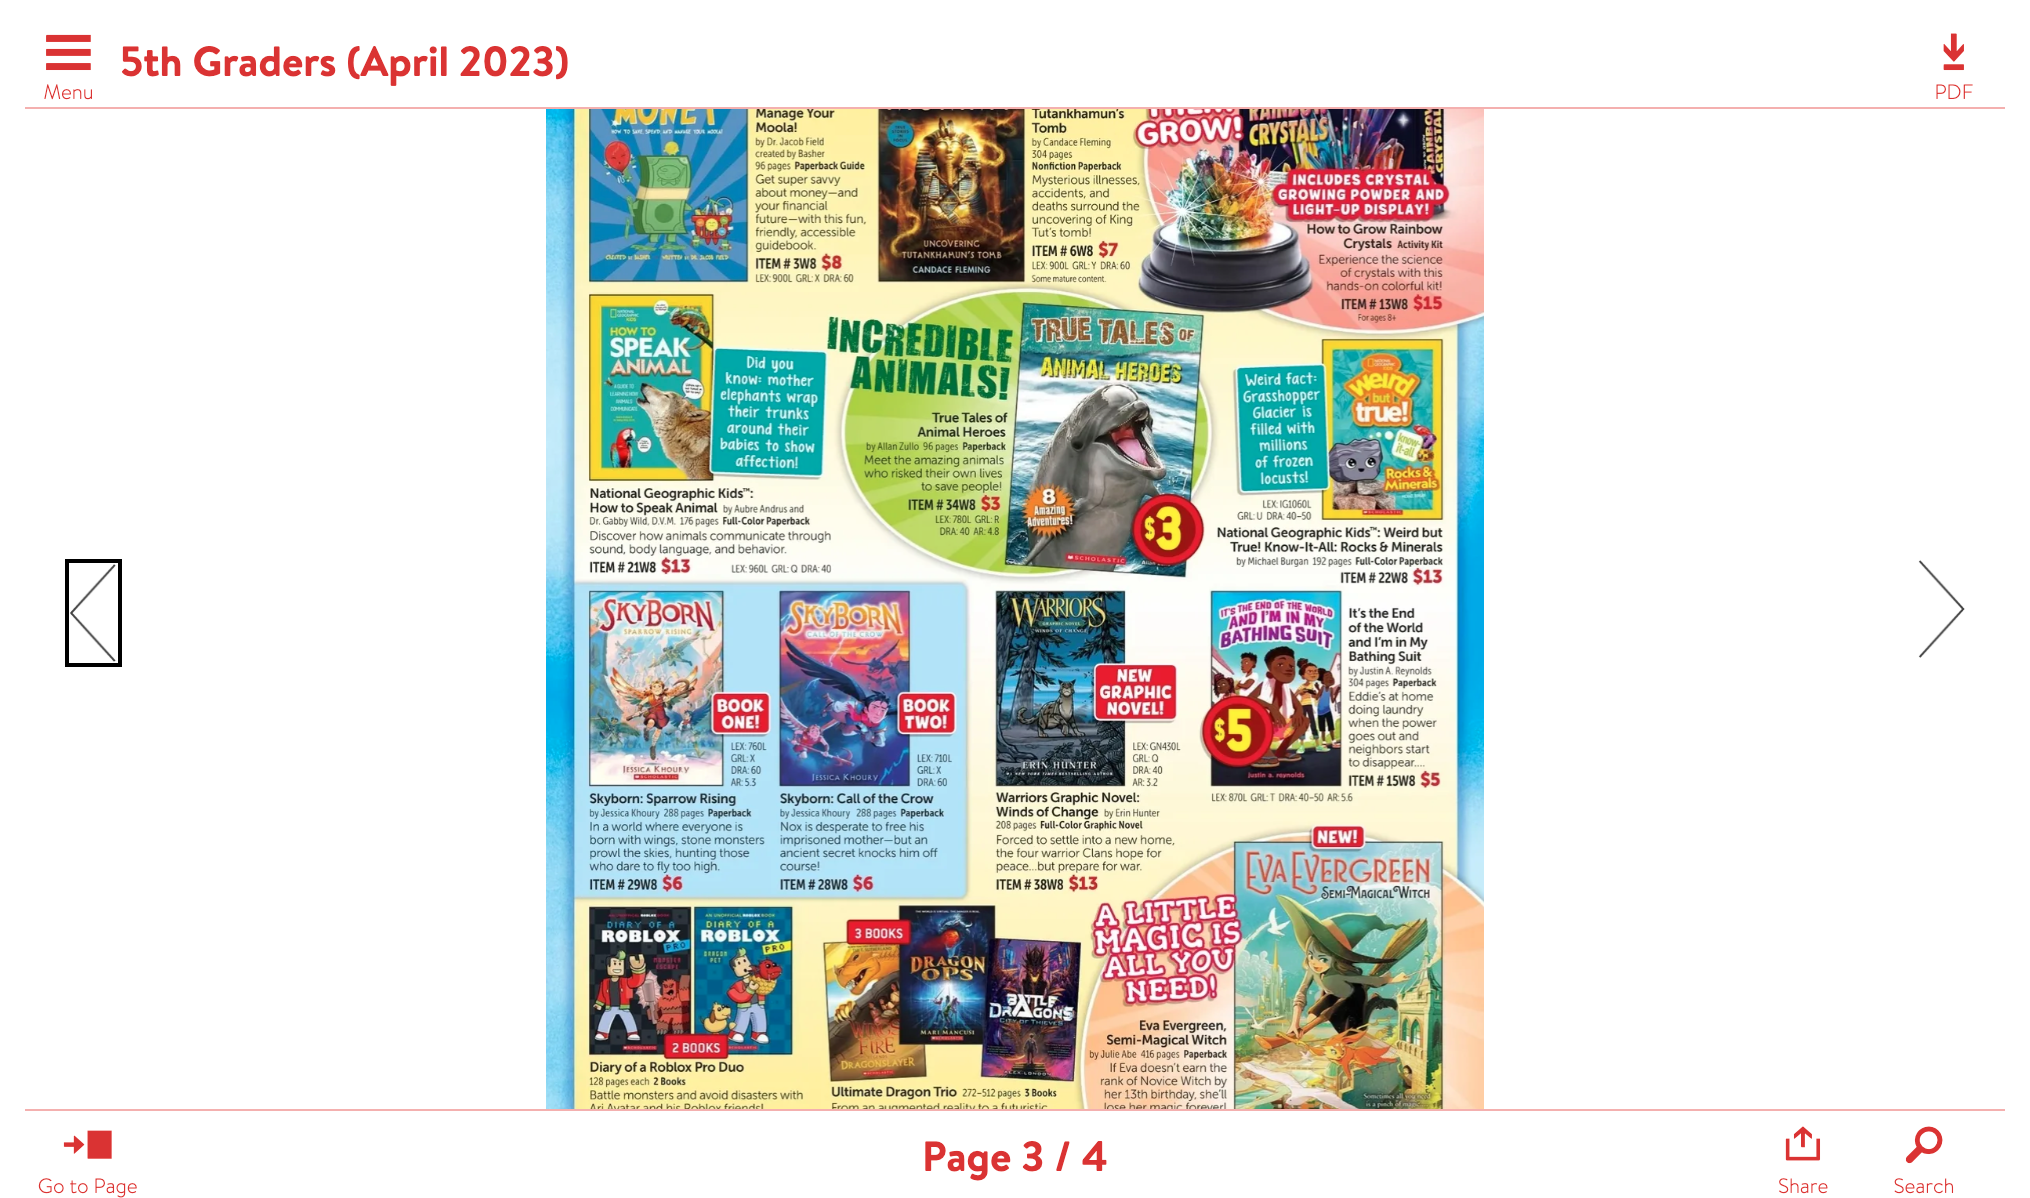 Scholastic Book Clubs: All Digital Flyers for Preschool September